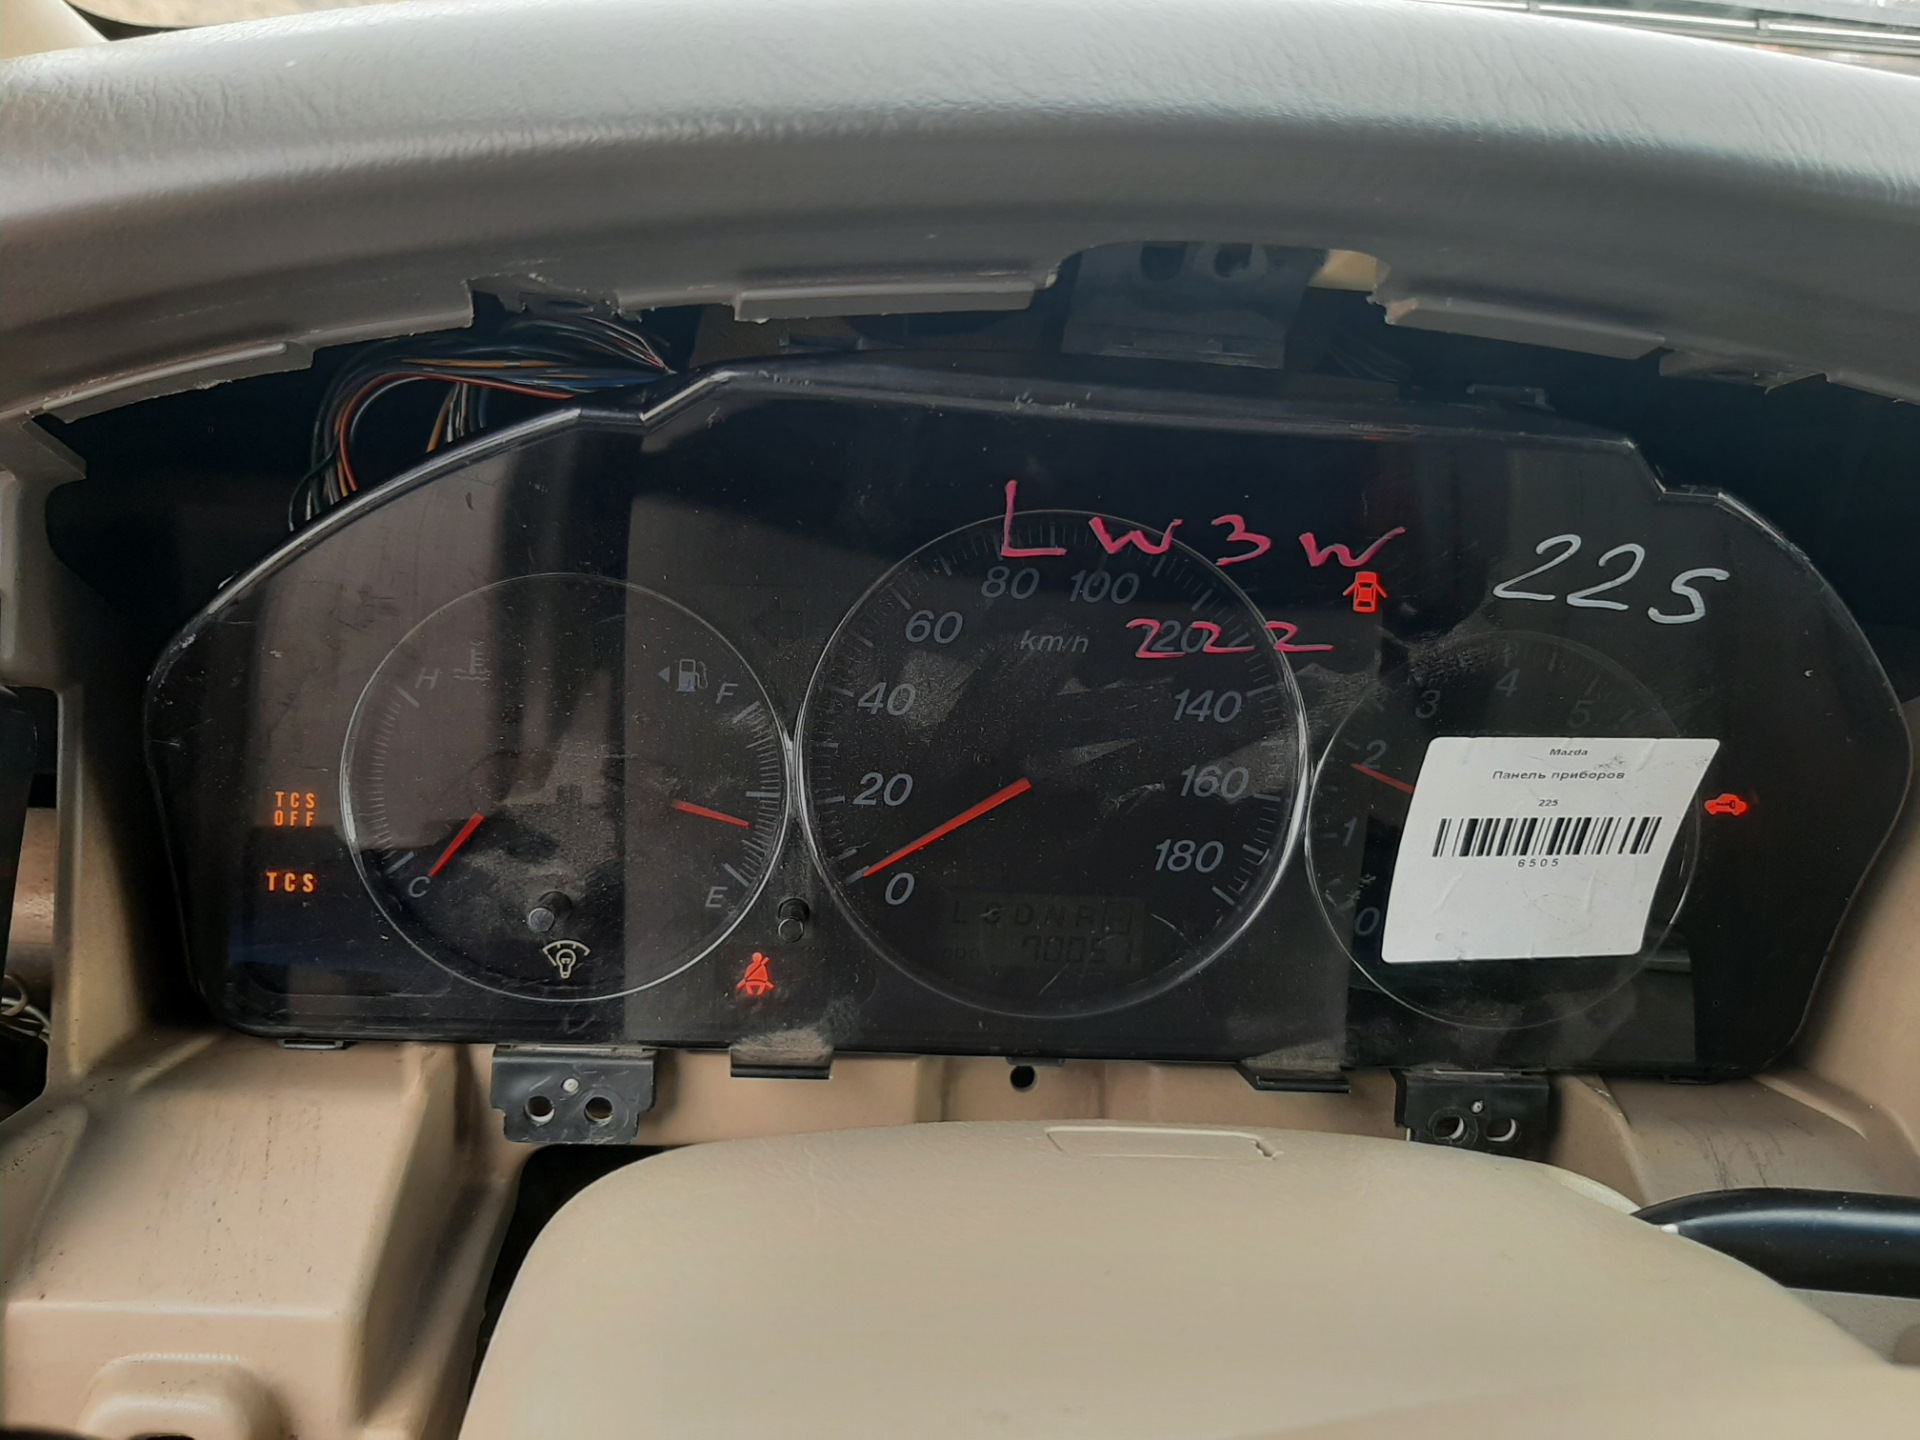 Панель приборов Мазда МПВ 2001. Приборная панель Mazda MPV 1. Мазда МПВ 2 приборная панель. Hold на панели приборов Мазда. Held на панели